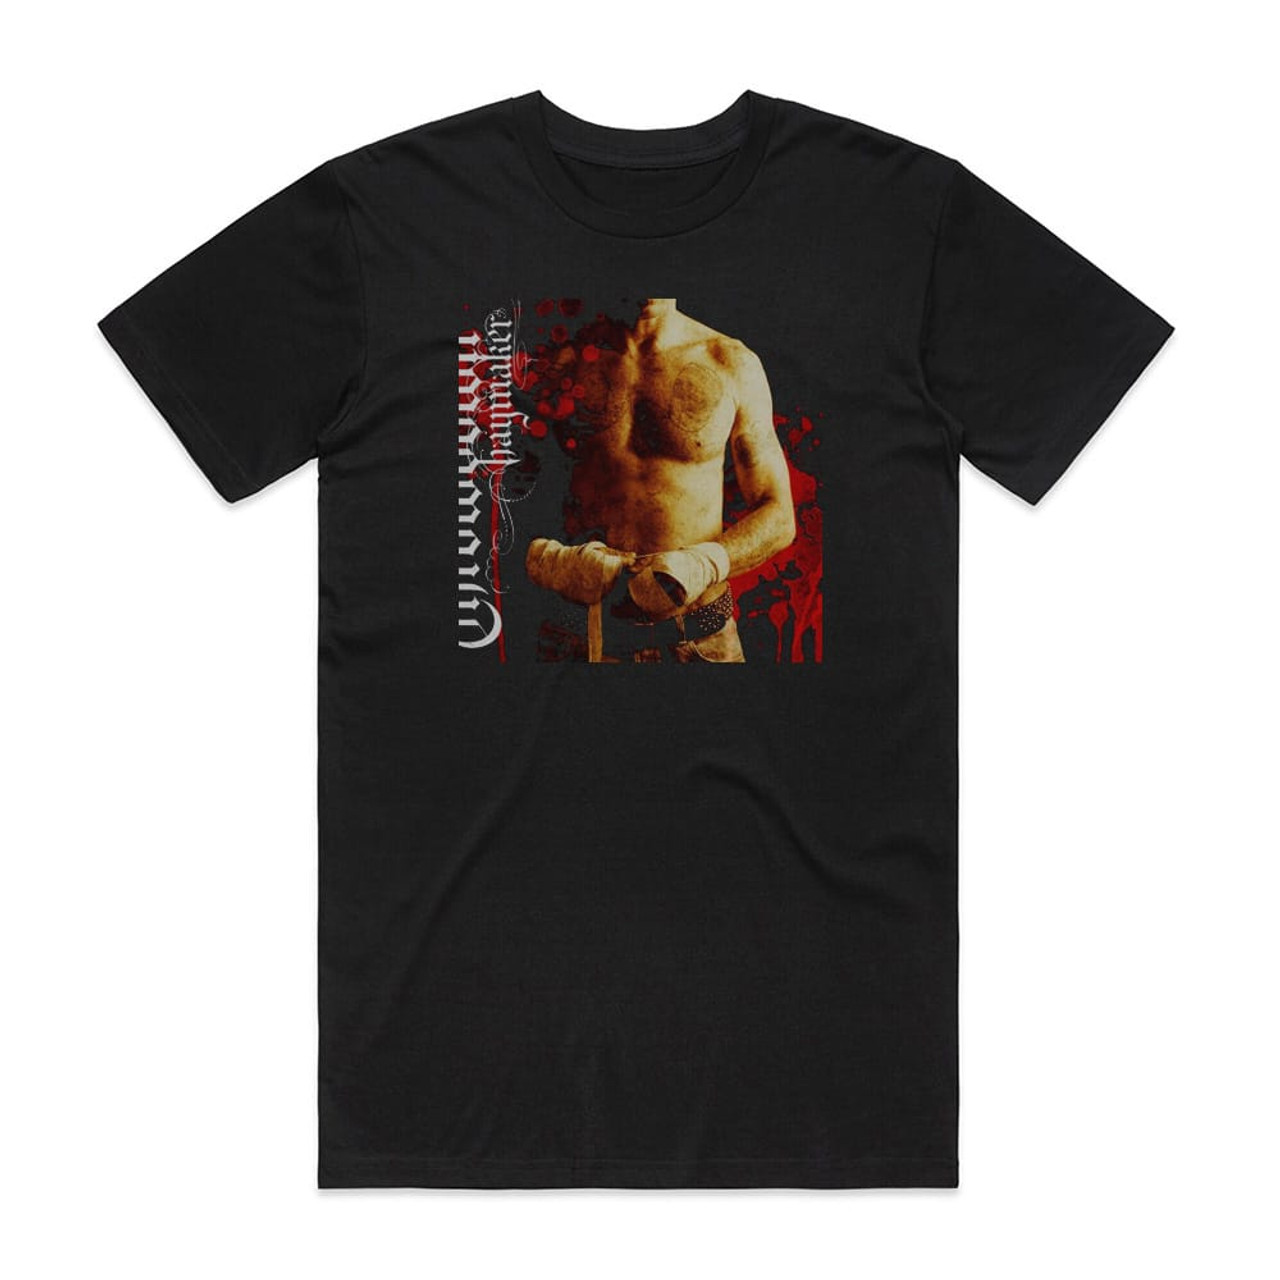 Throwdown Haymaker Album Cover T-Shirt Black